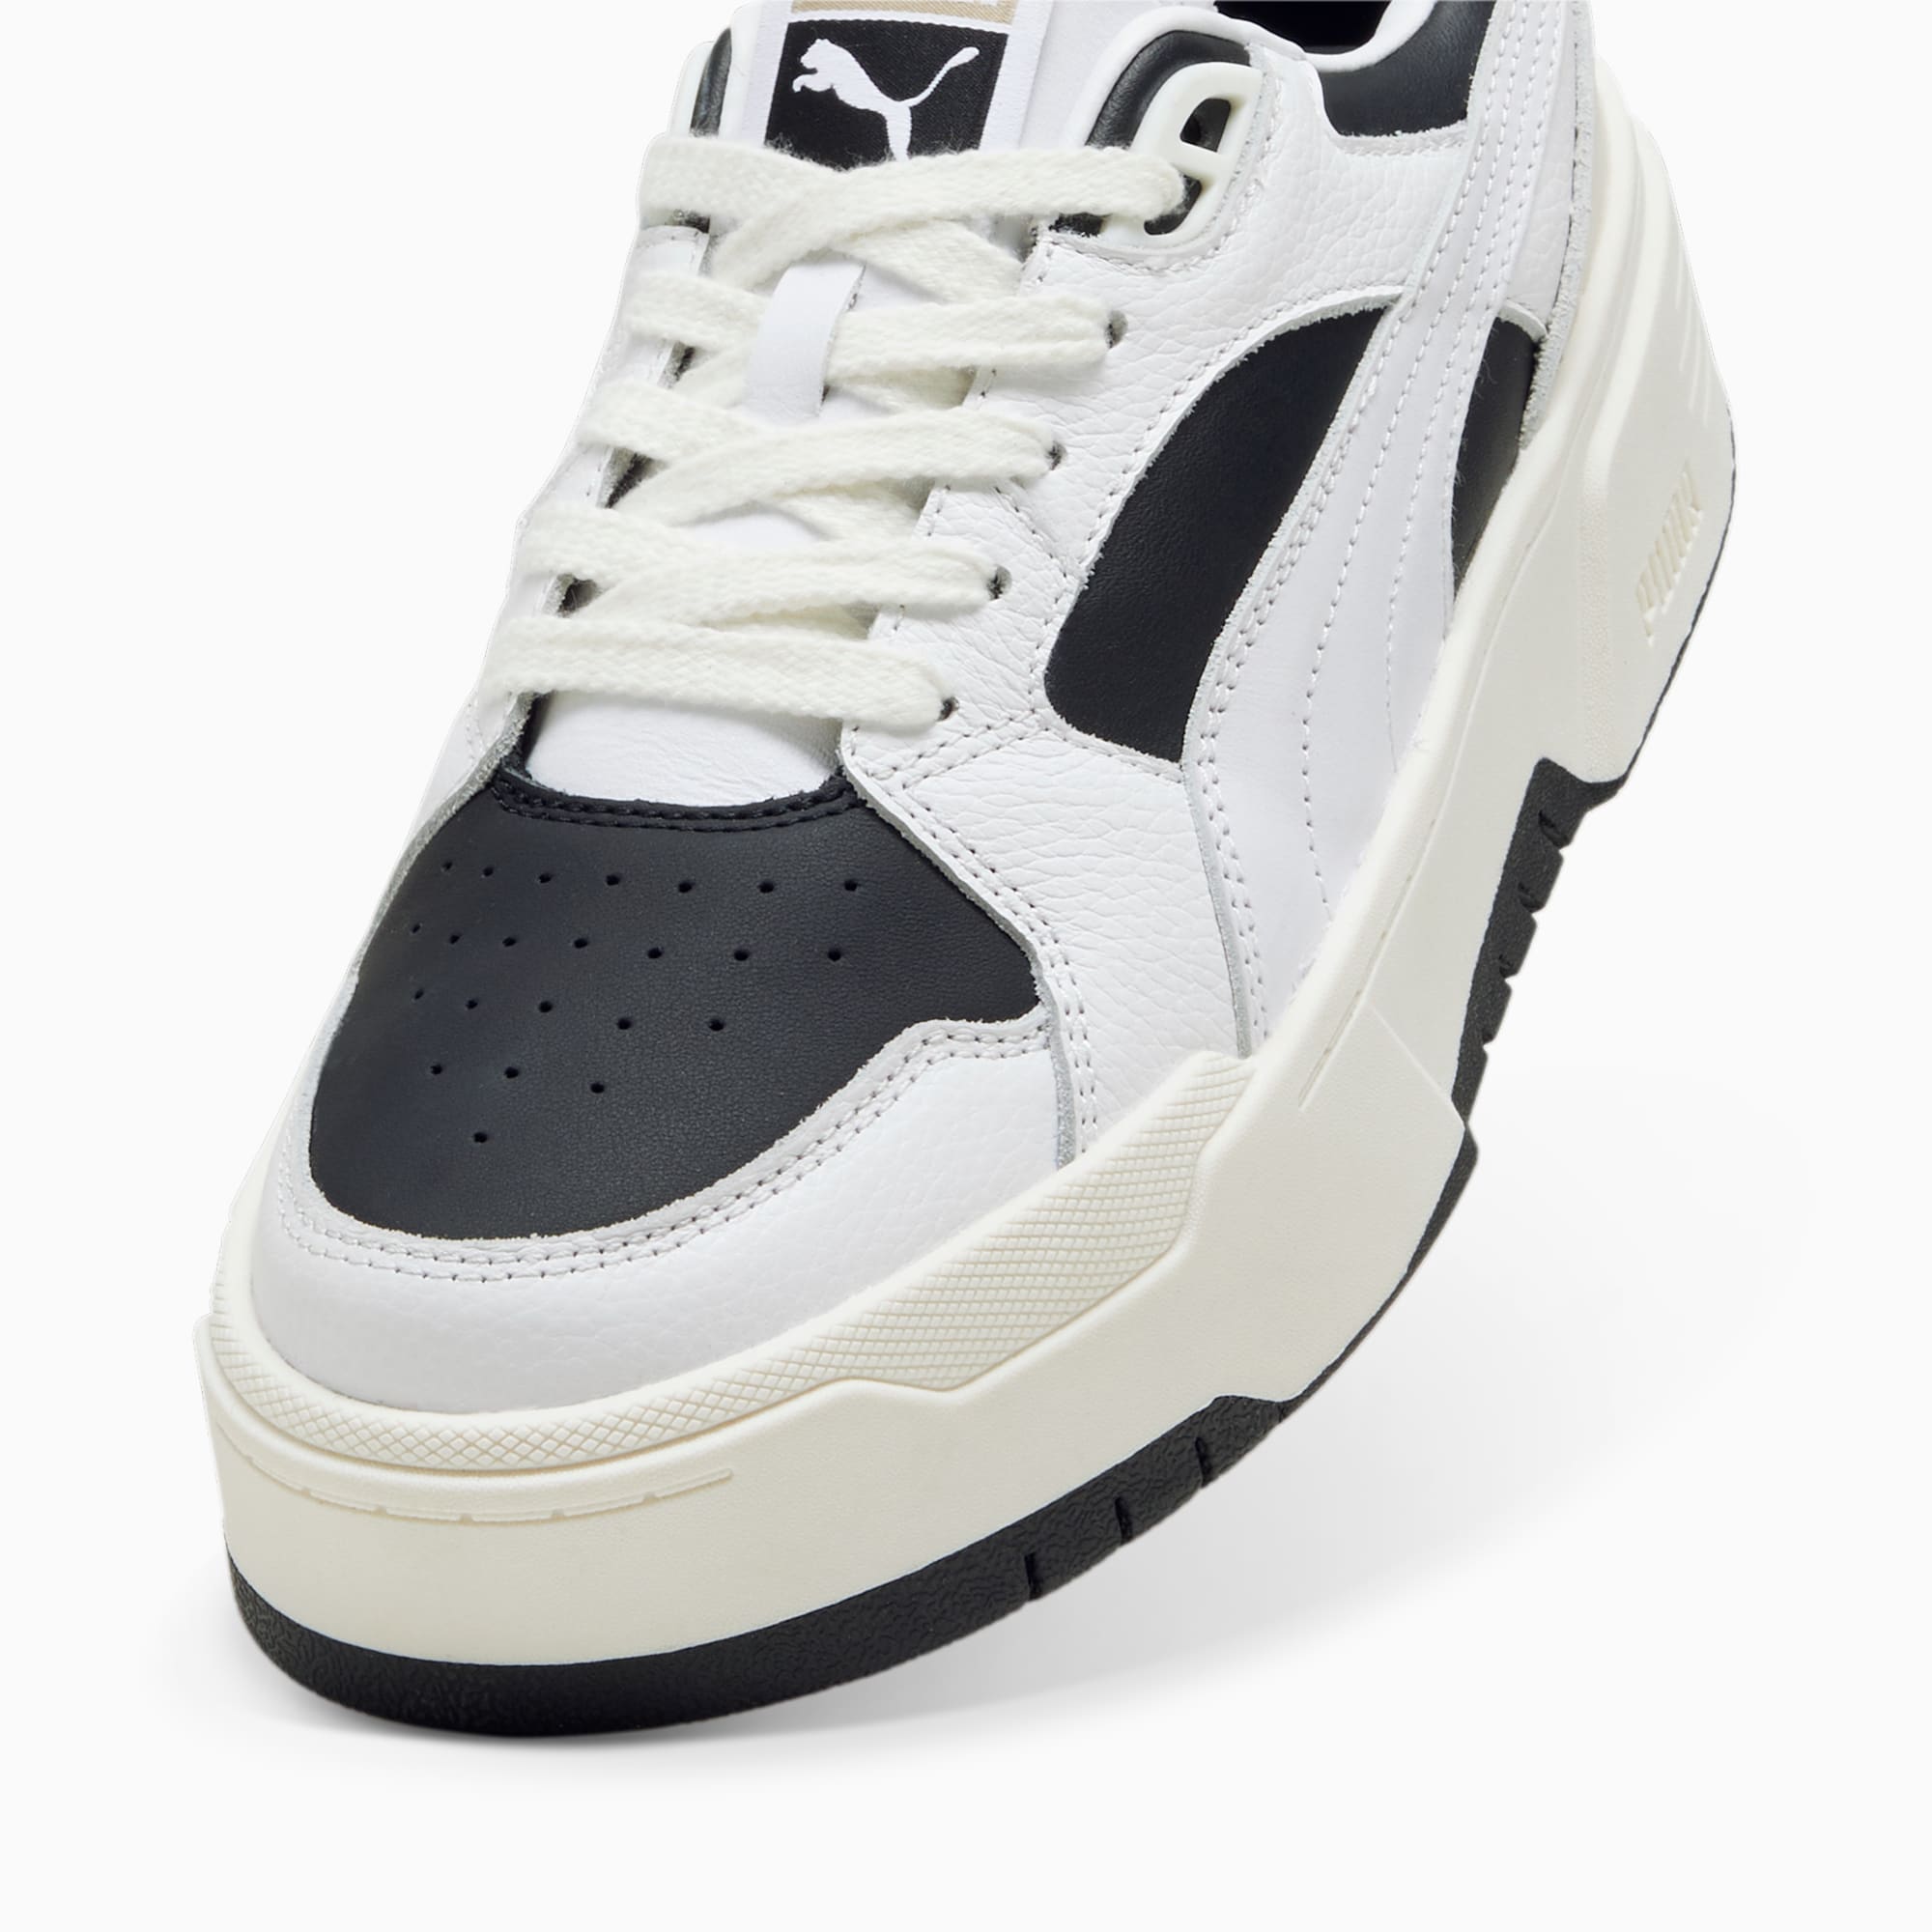 PUMA Ca. Flyz Prm Women's Sneakers, Black/Warm White, Size 35,5, Shoes